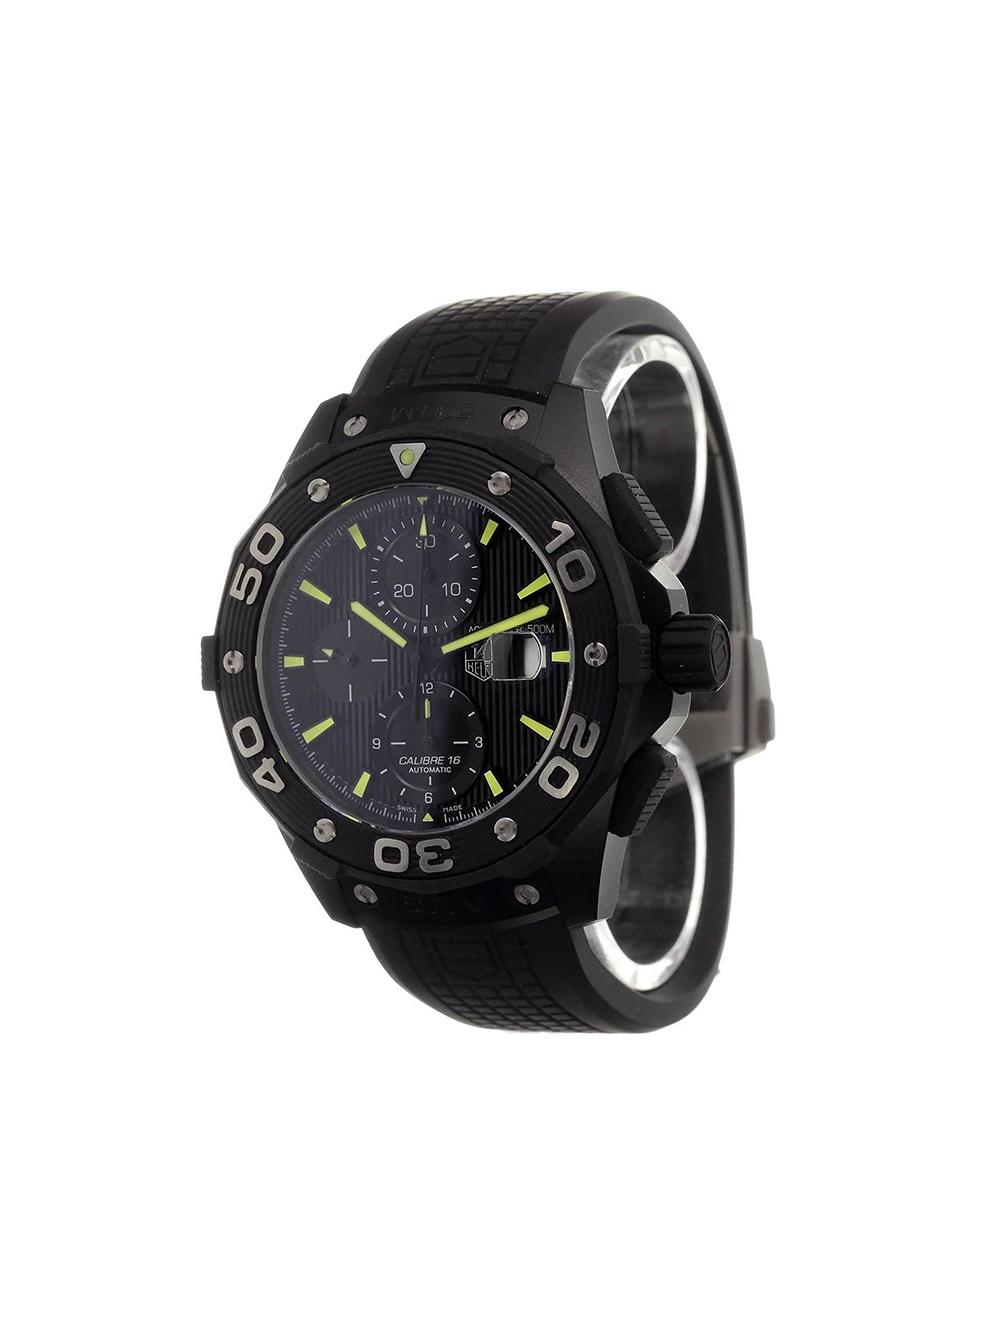 'Aquaracer' analog watch